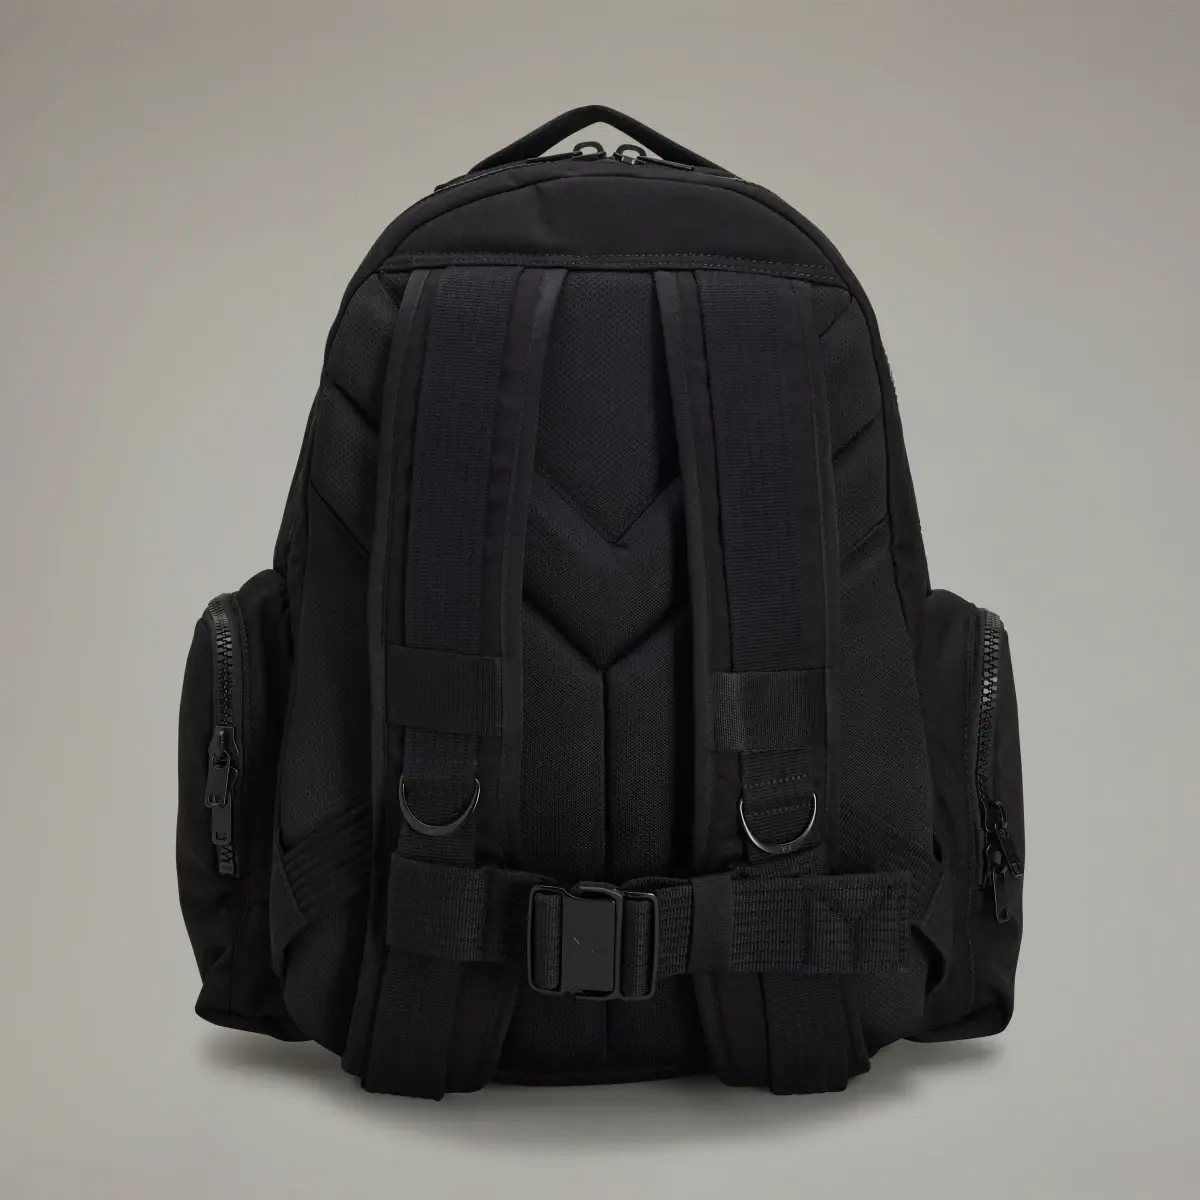 Adidas Y-3 Backpack. 3